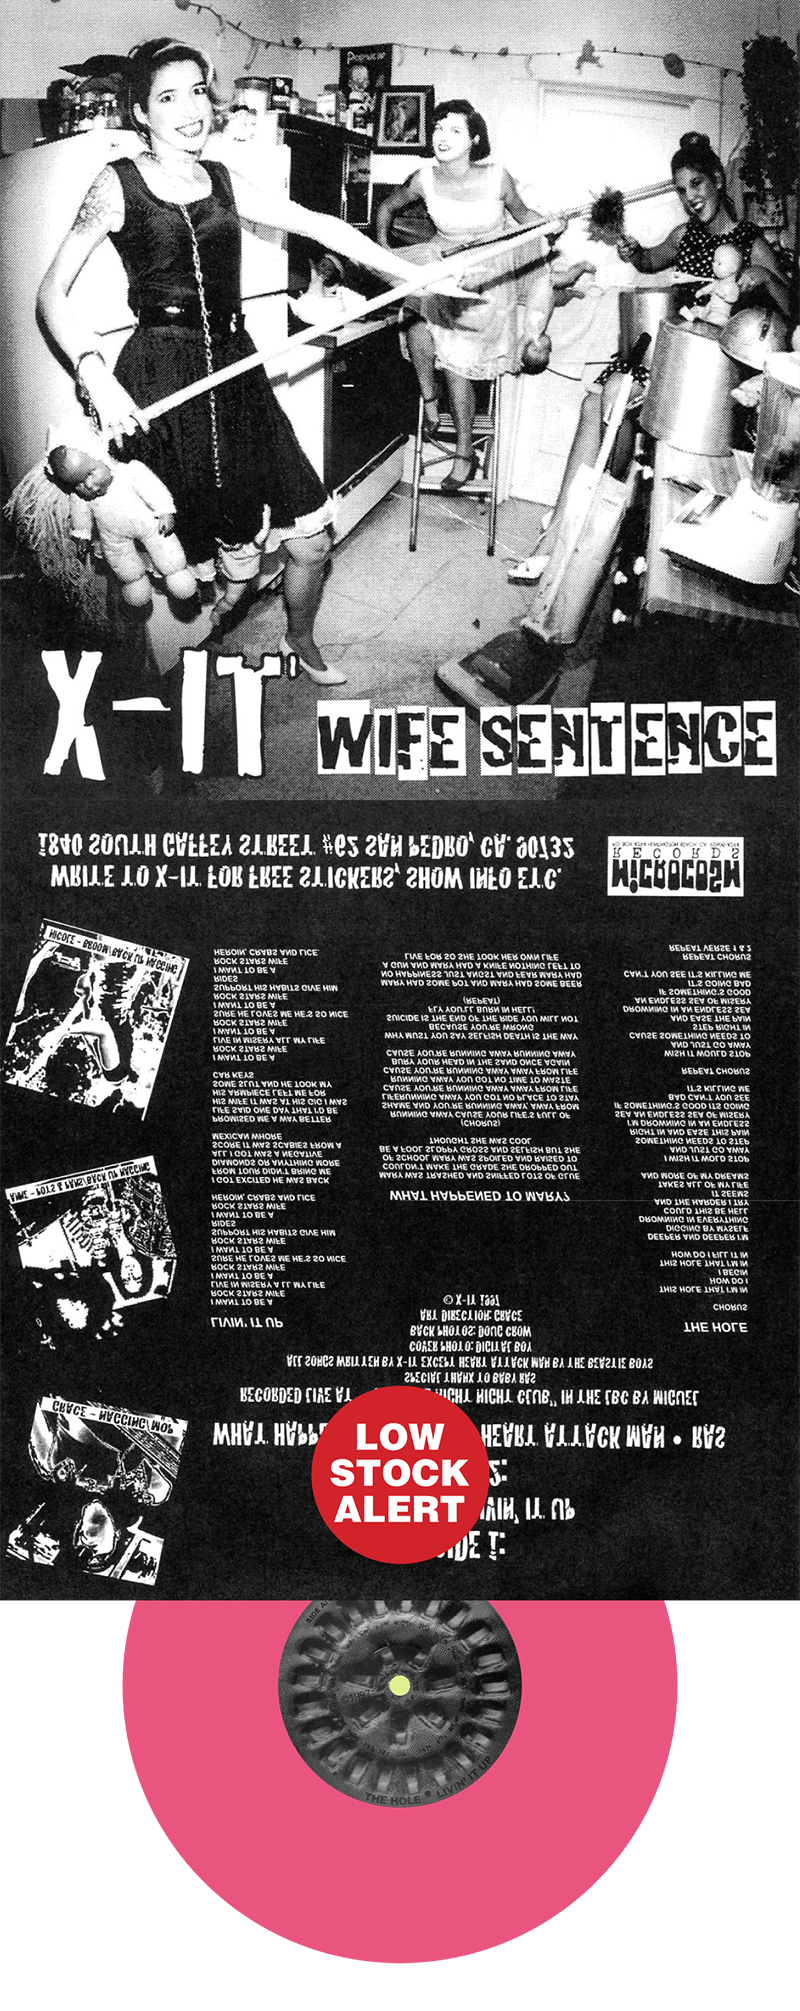 X-IT - Wife Sentence → 7" ep